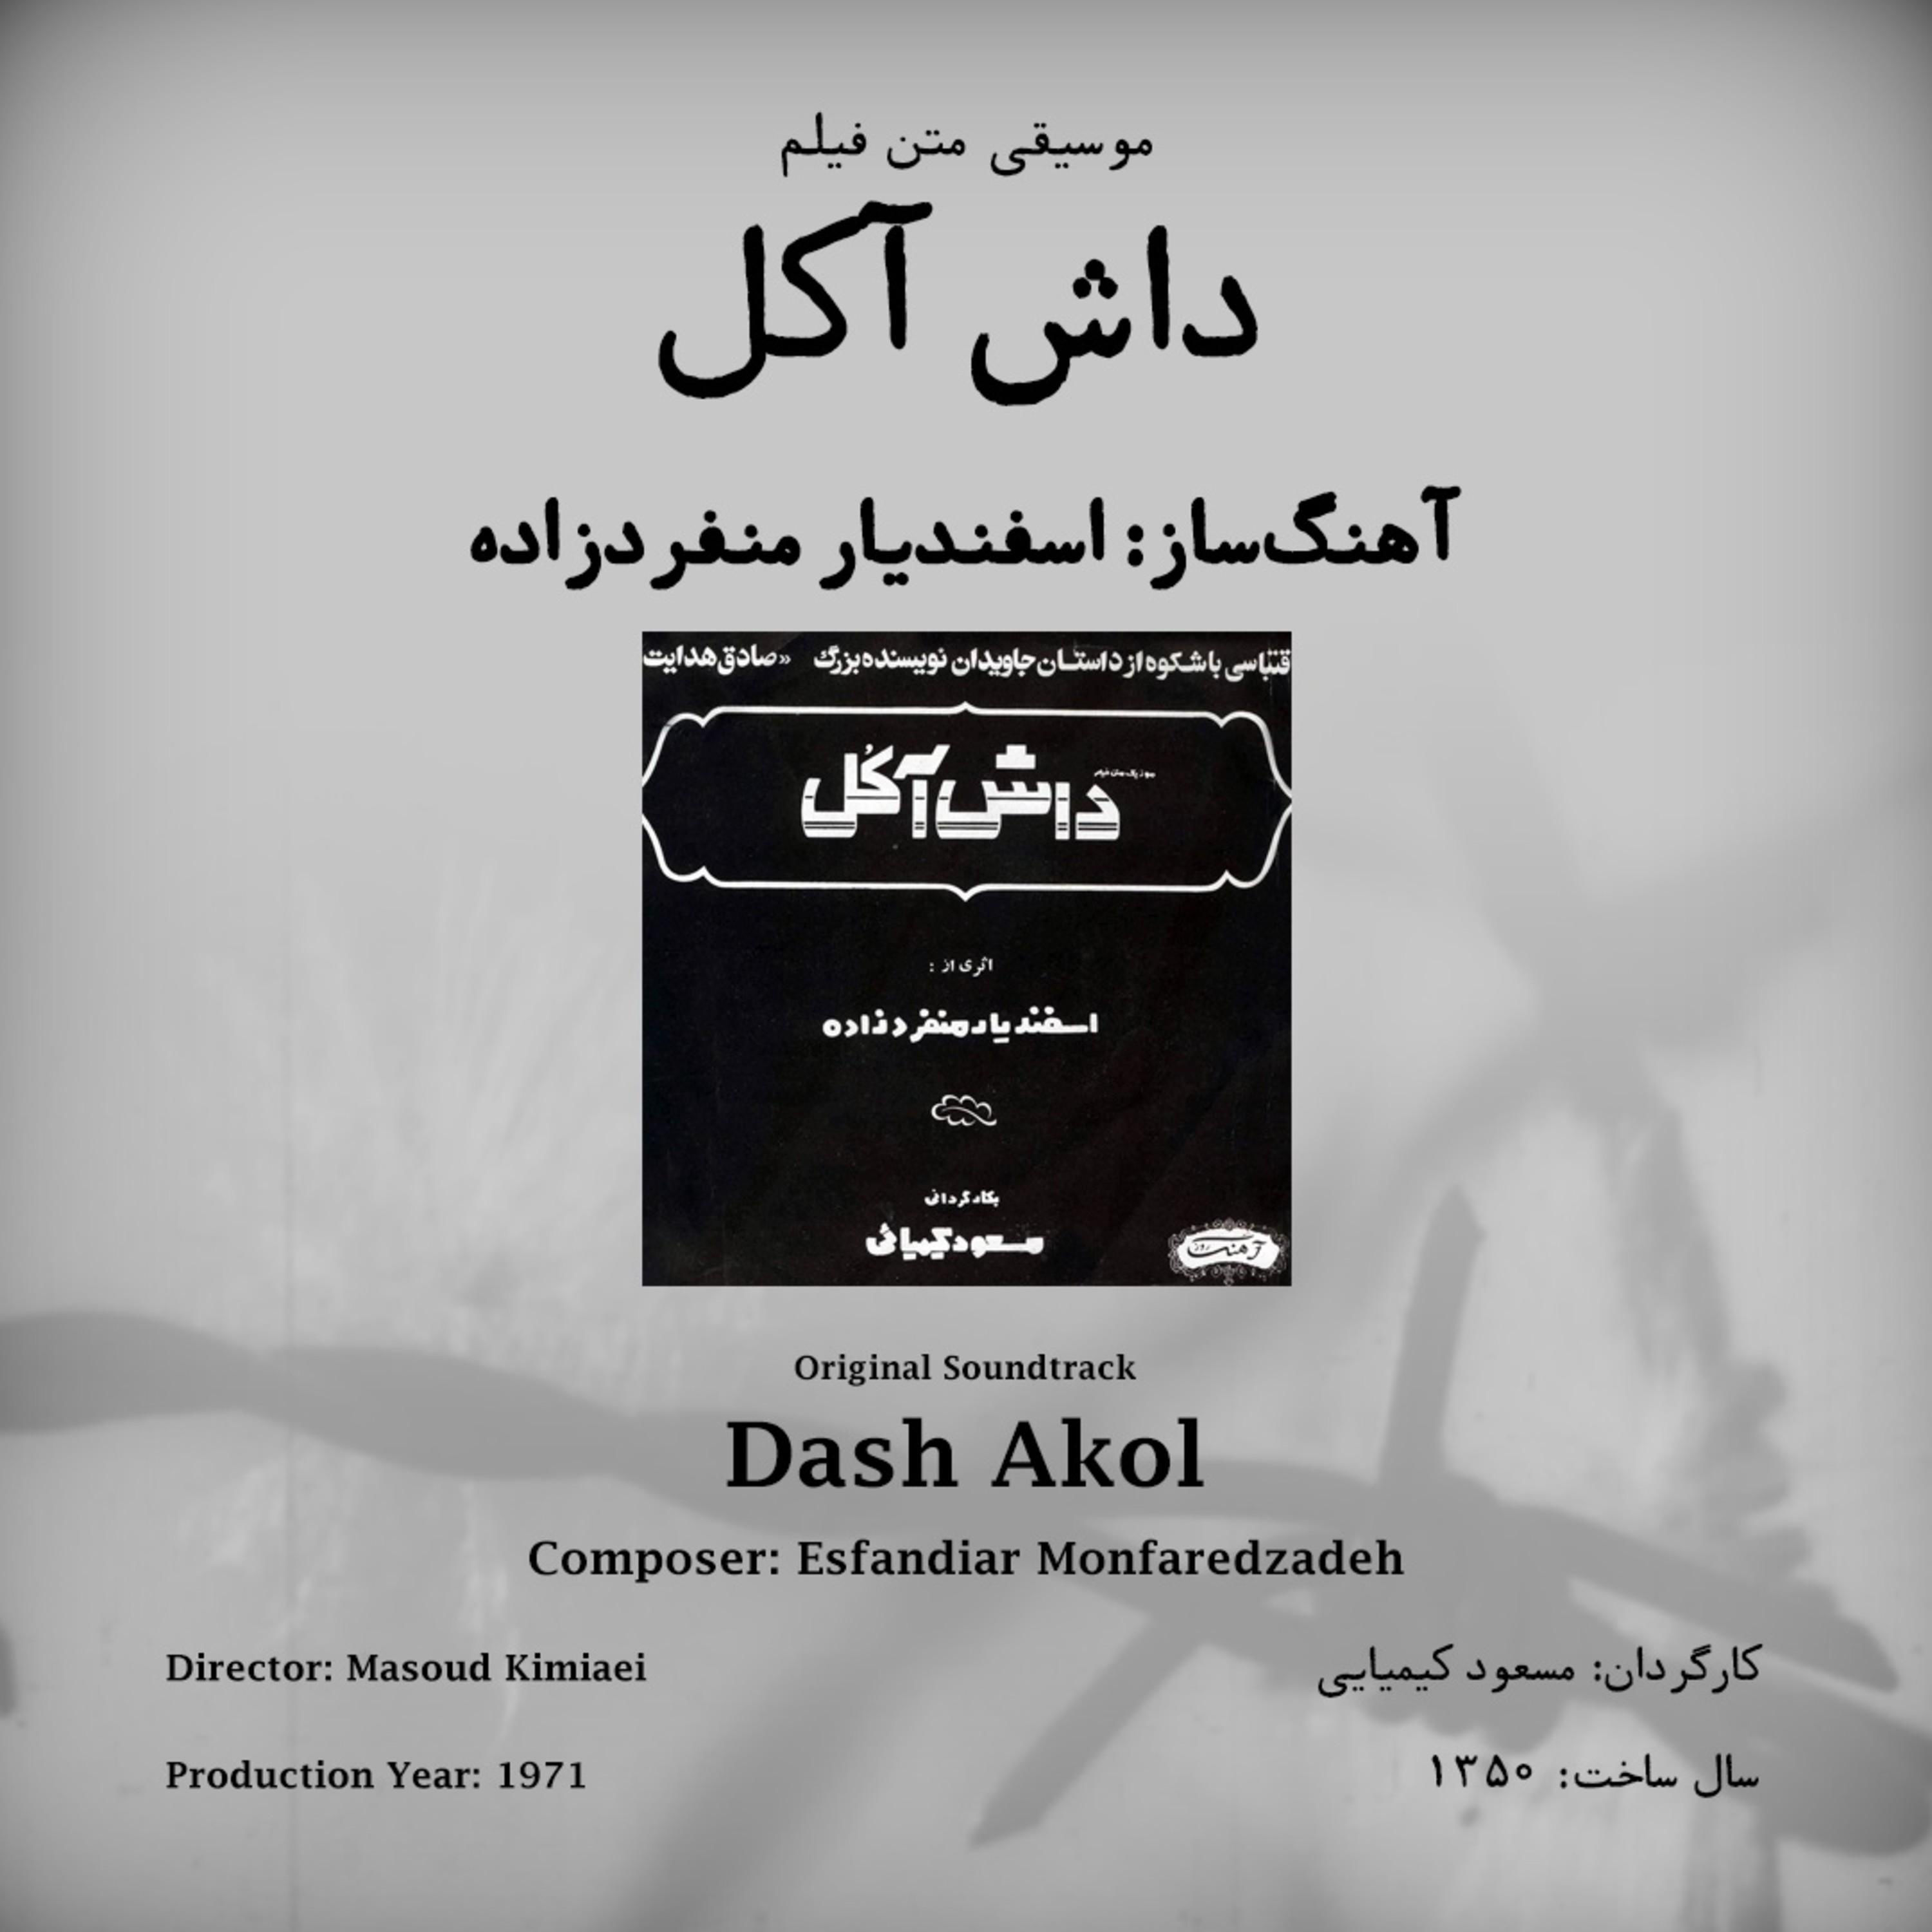 Dash soundtrack. Dash akol (1971). Аколь. Music "1971 year Art".